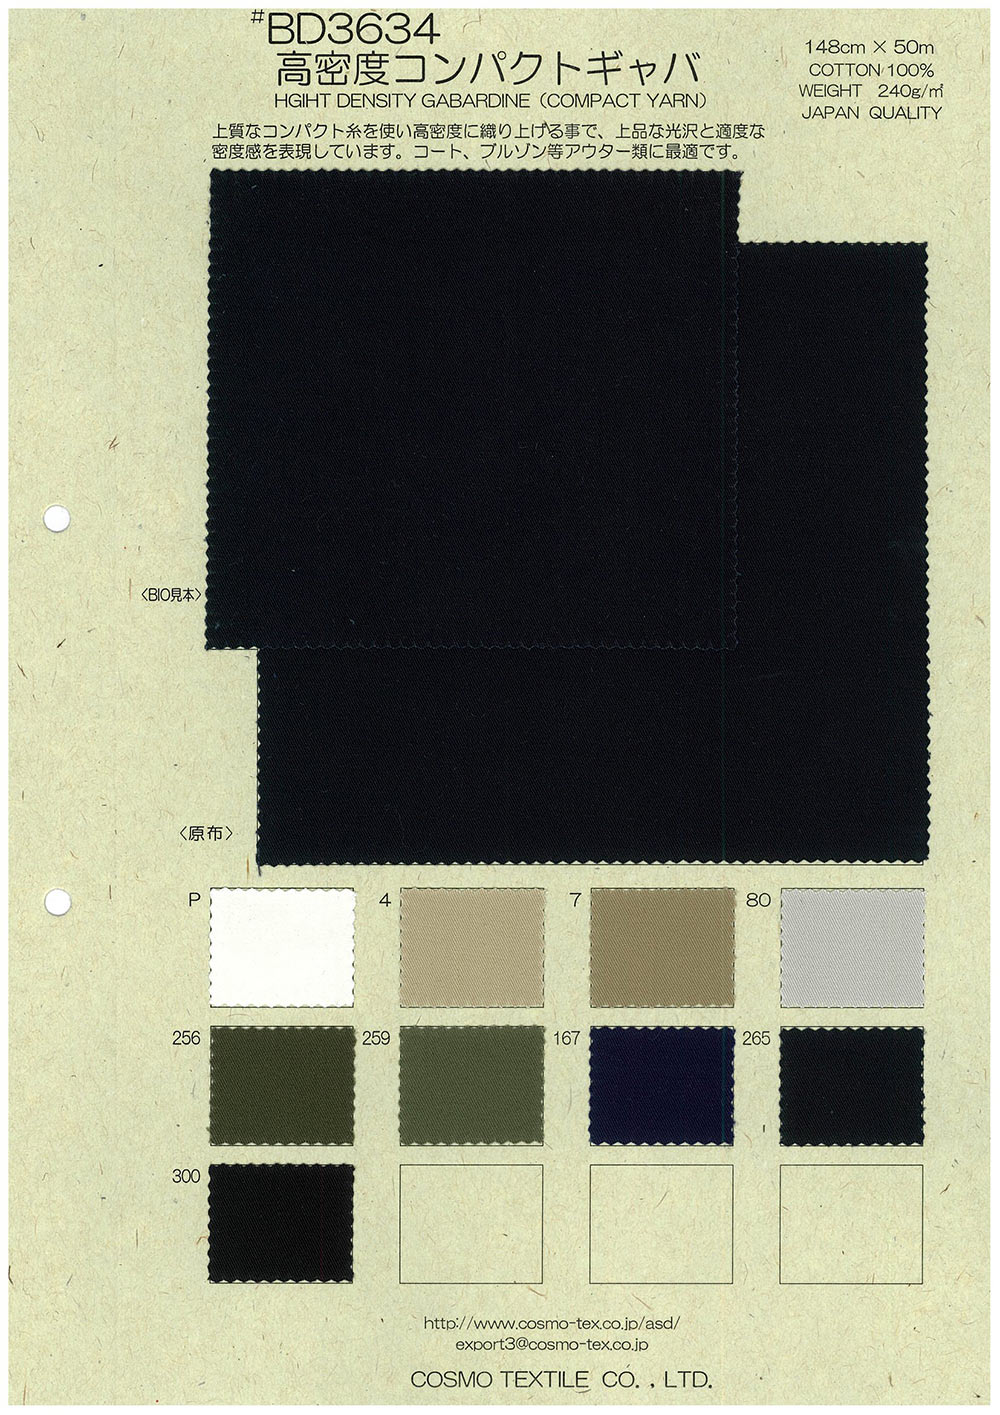 BD3634 Kompakte Gabardine[Textilgewebe] COSMO TEXTILE